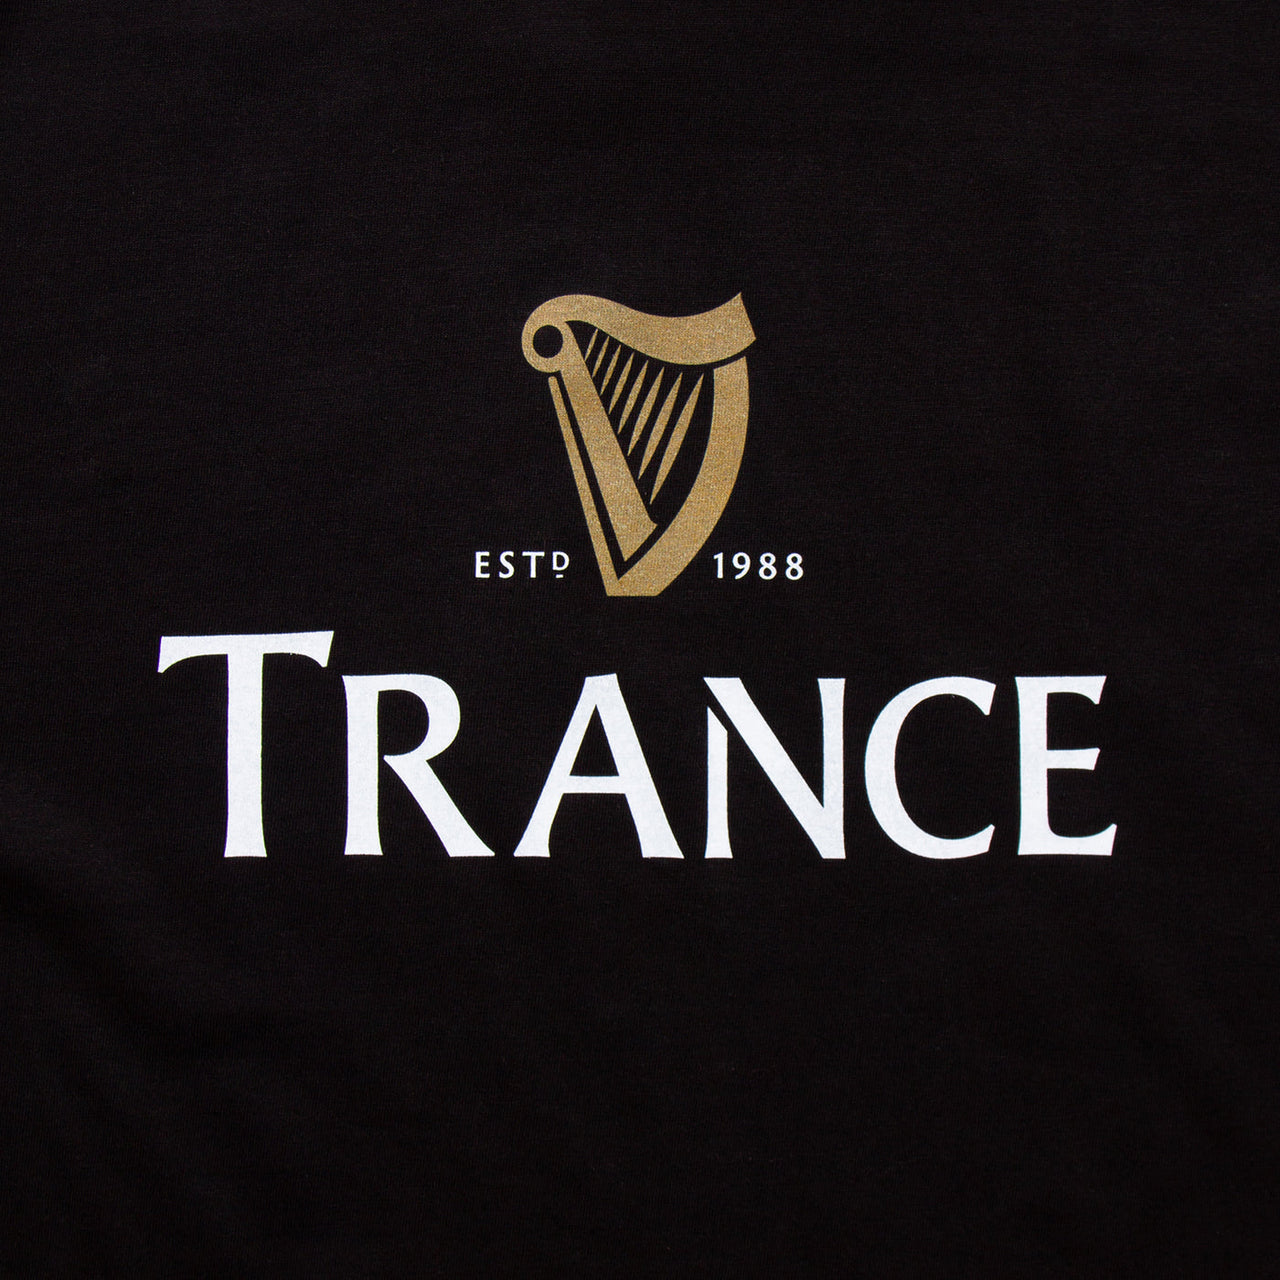 Crest Trance Harp - Tshirt - Black or Green